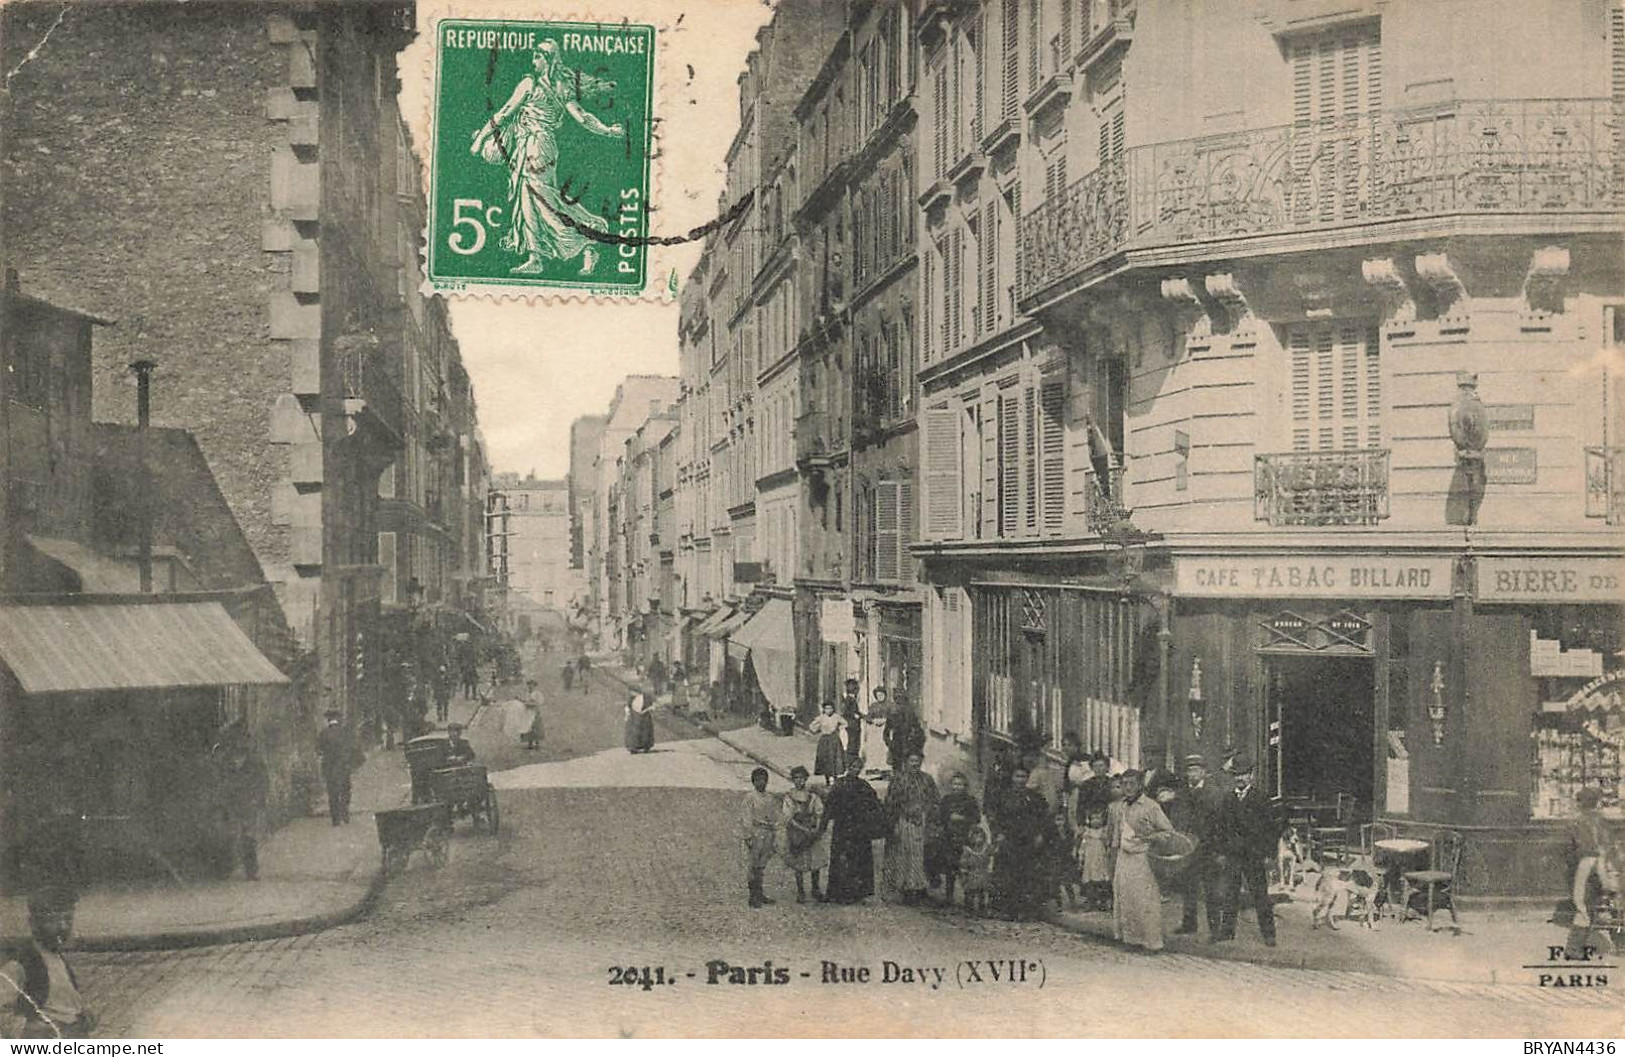 PARIS - 17 ème - RUE DAVY ANIMEE - CAFE - TABAC - BILLARD - Paris (17)